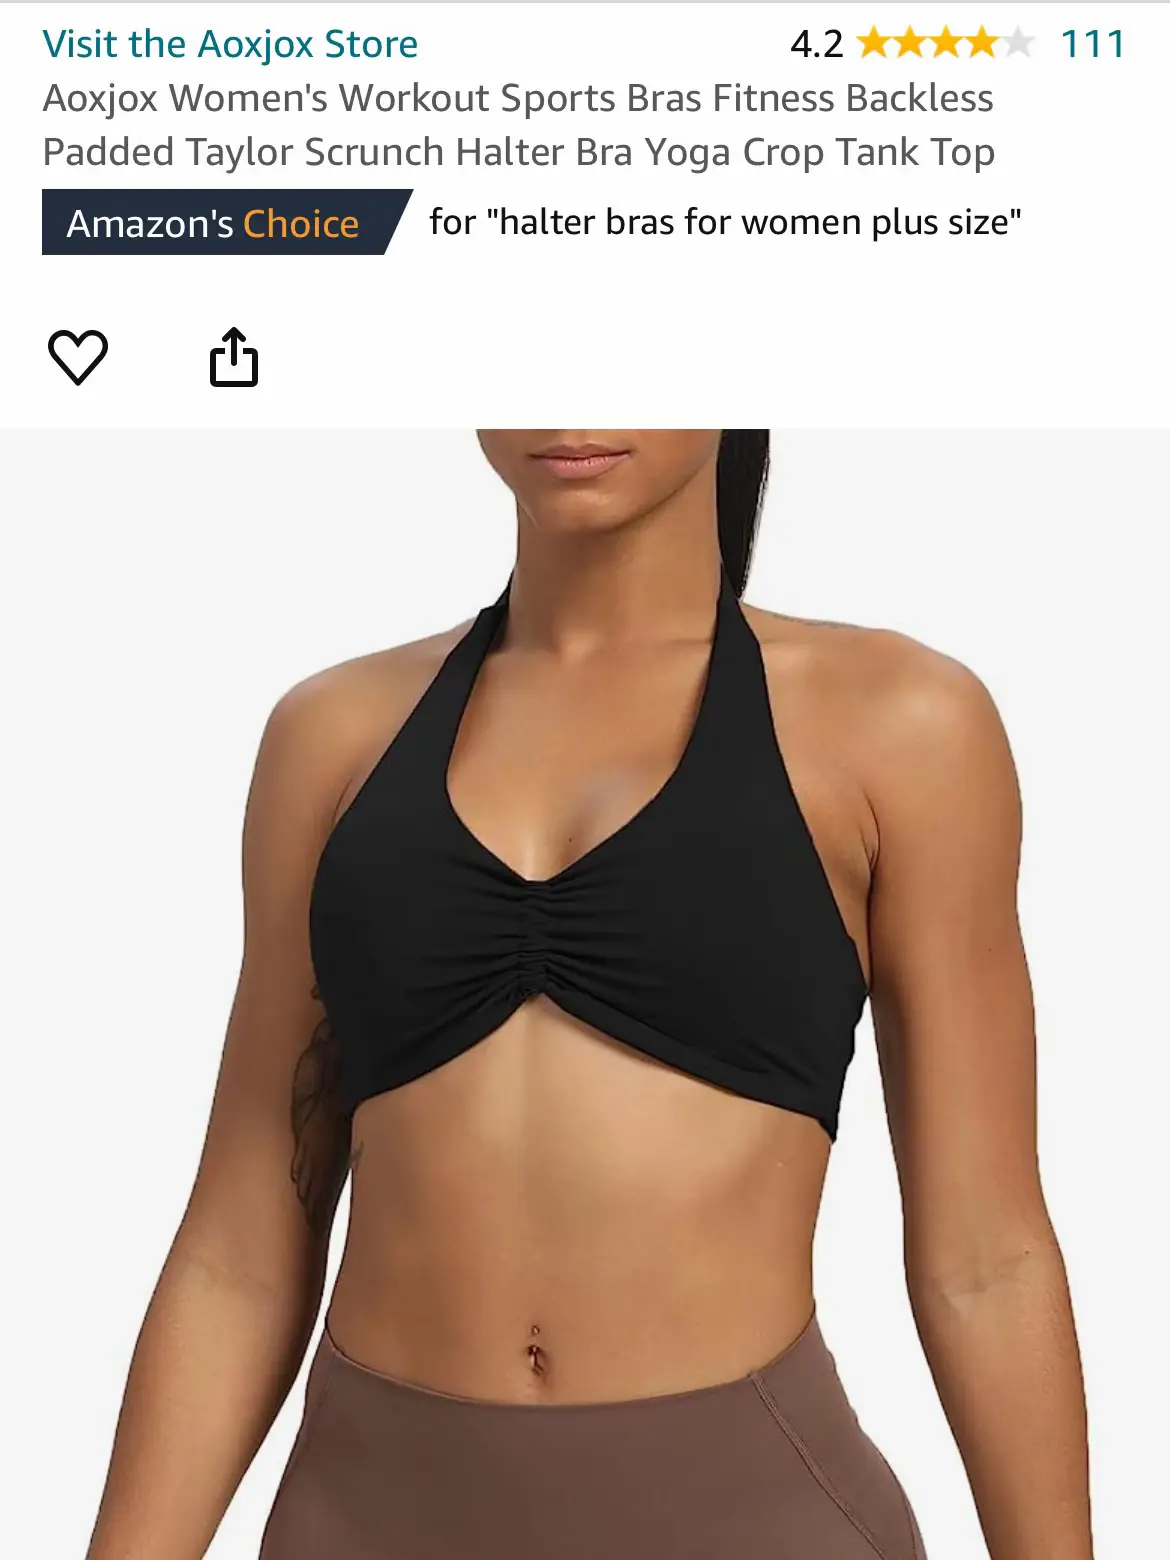  Strappy Sports Bras For Women - Criss Cross Back Sexy  Wireless Padded Yoga Bra Cute Workout Melanite X-Small